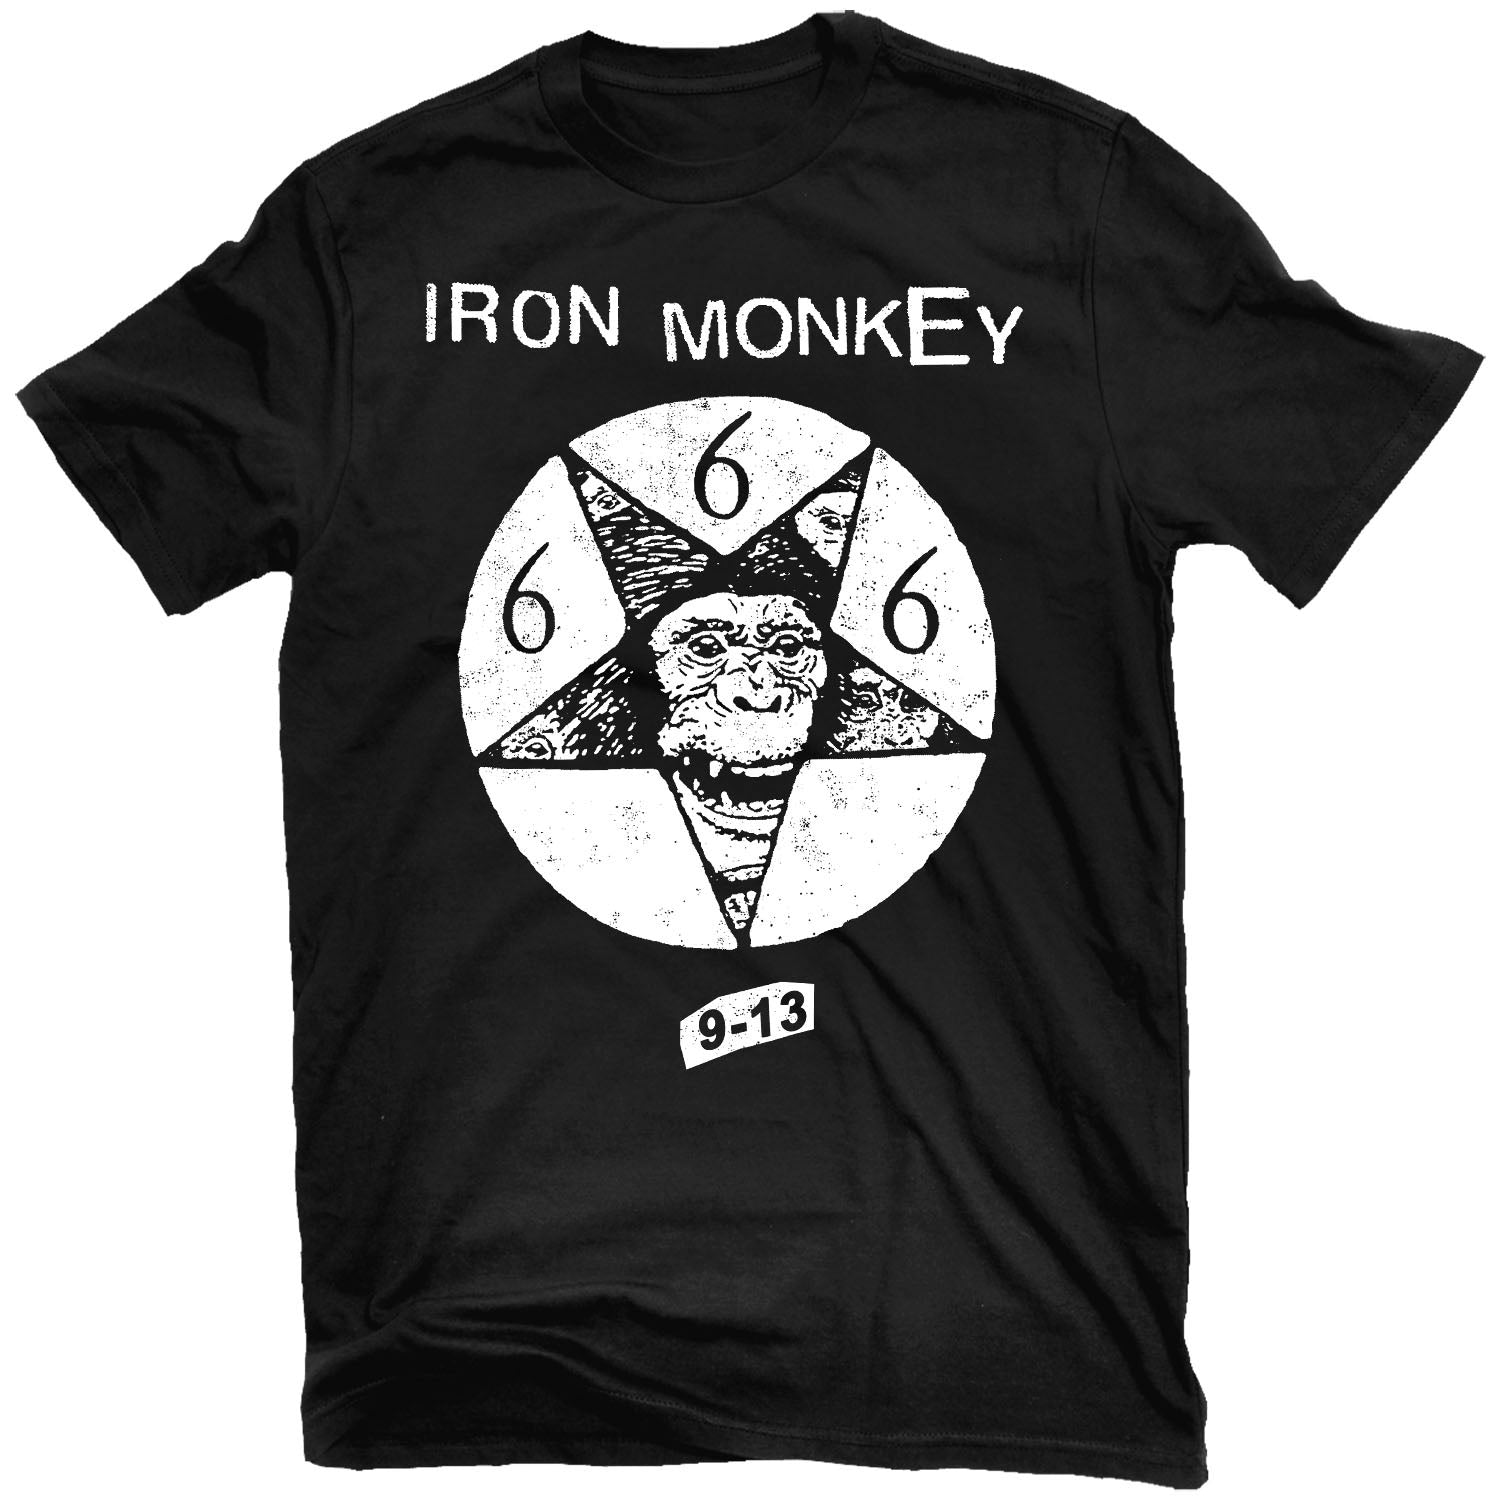 Iron Monkey "9-13" T-Shirt